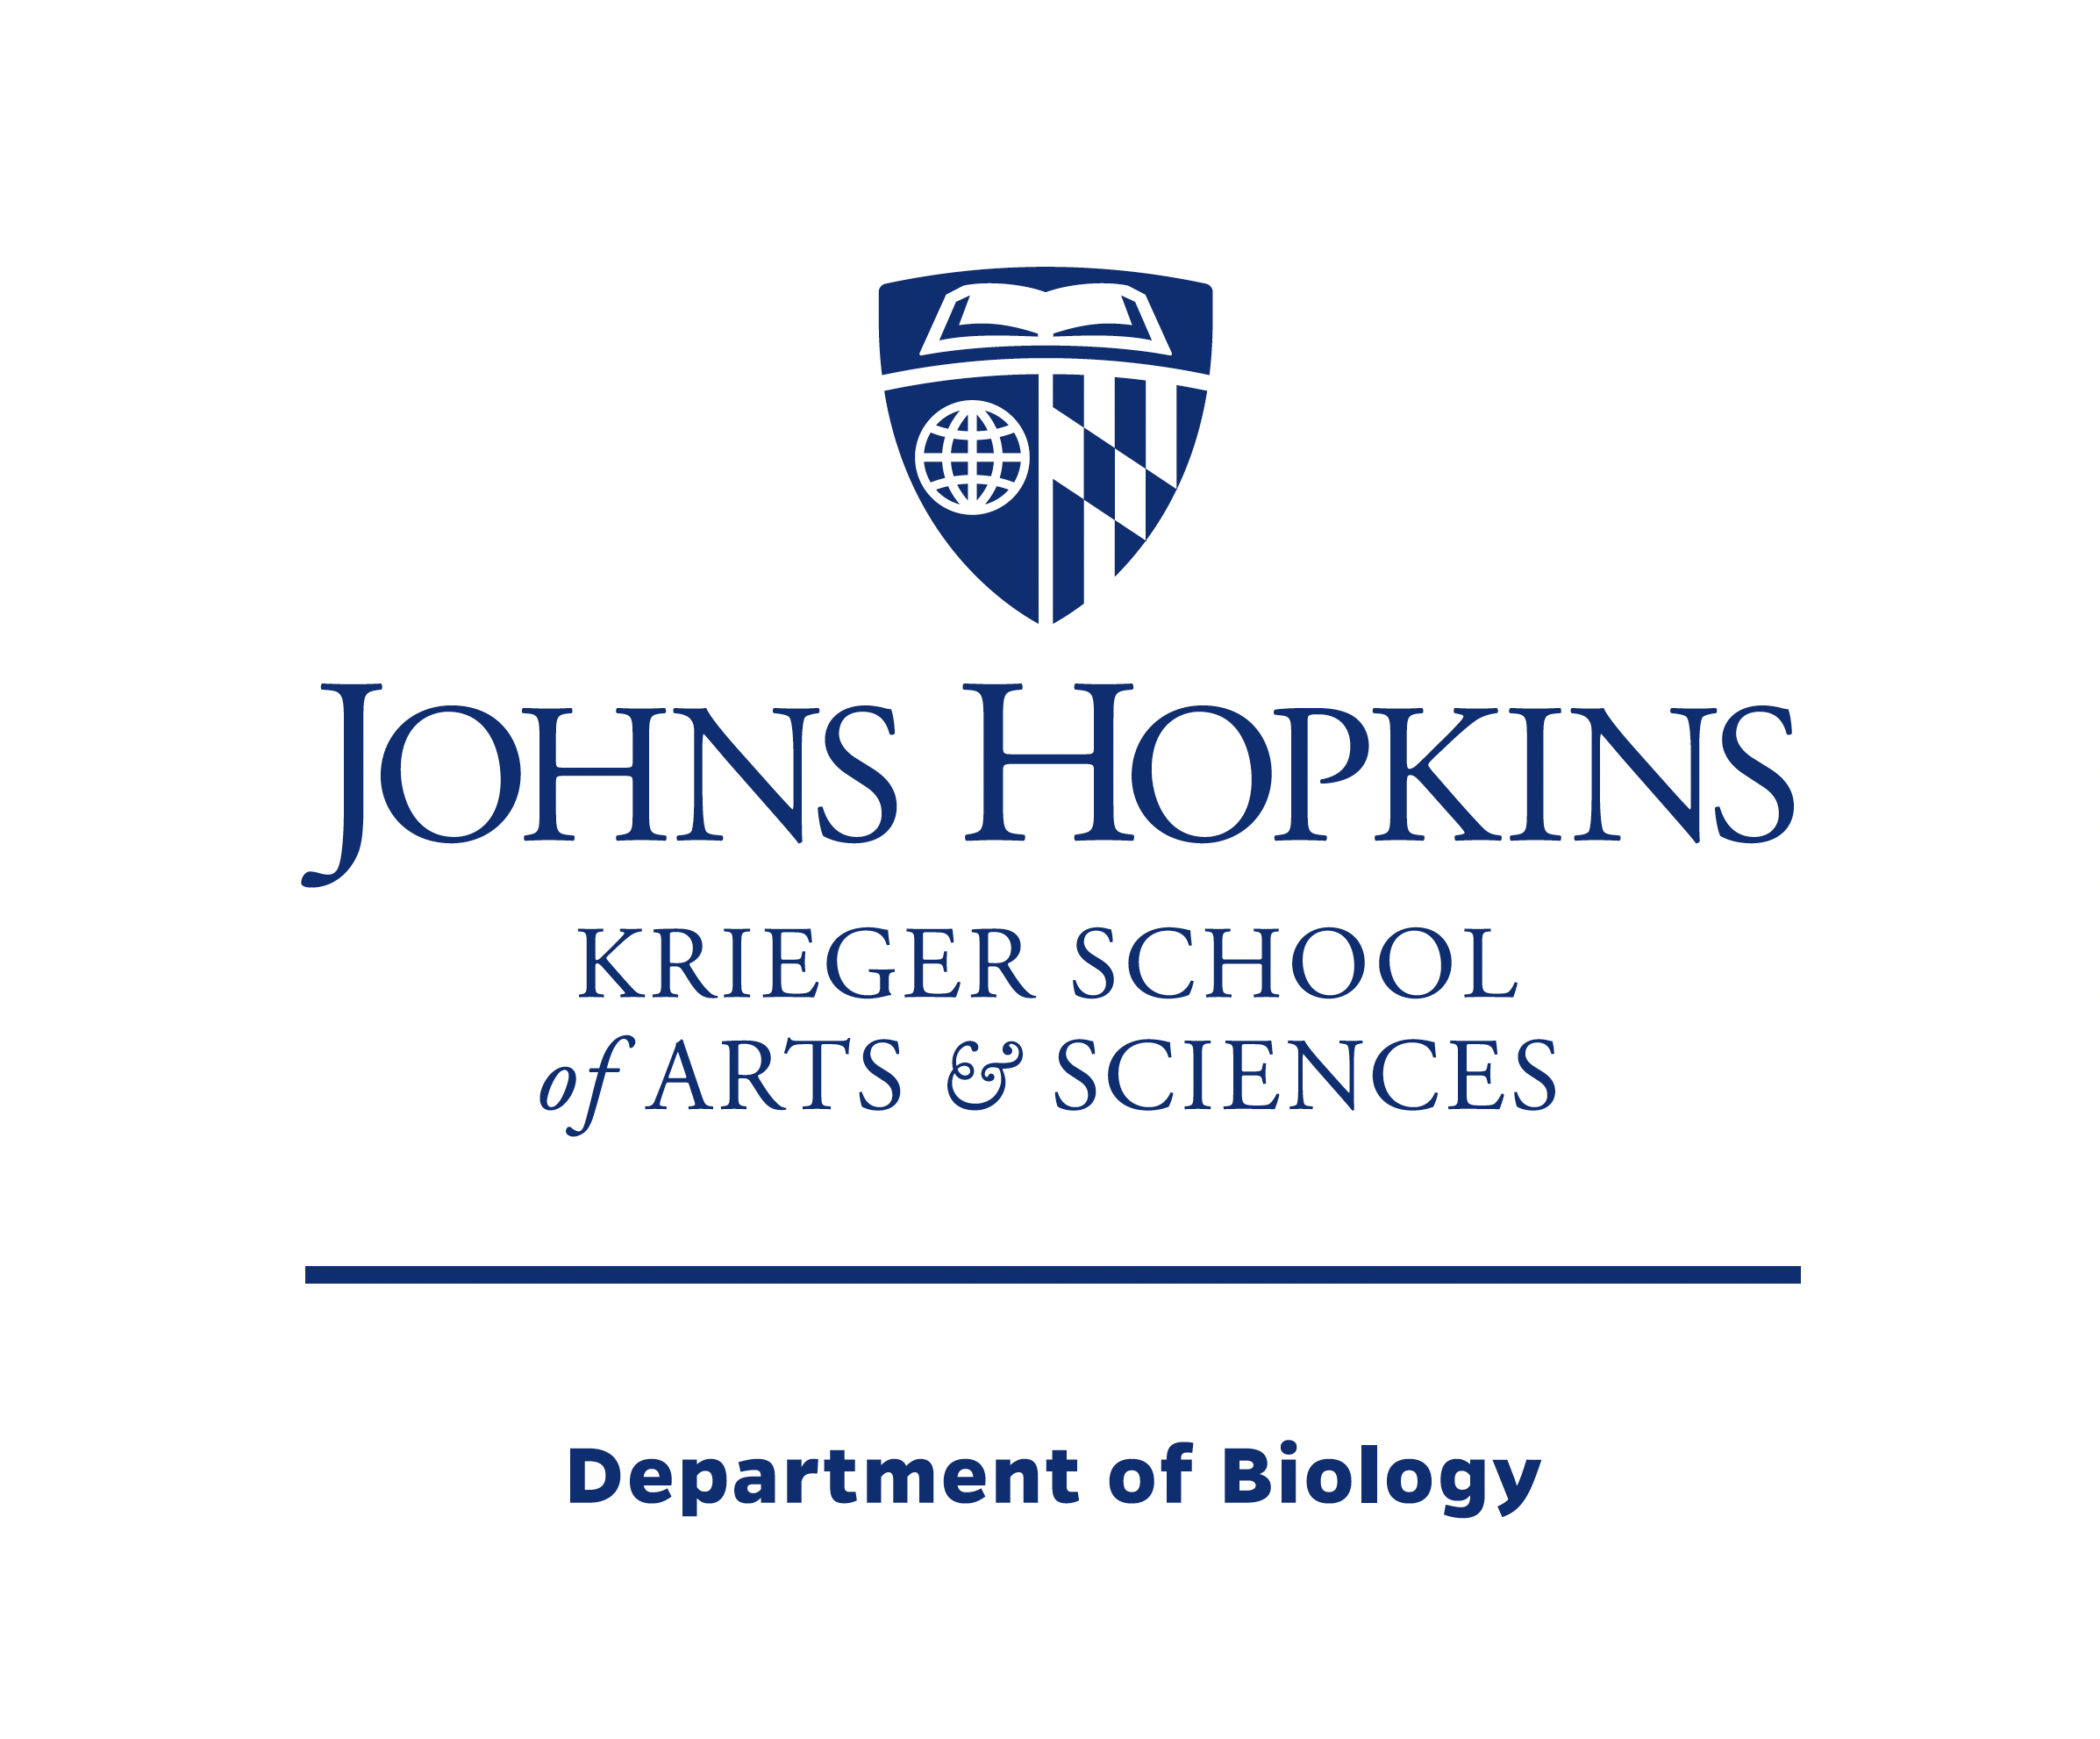 Johns Hopkins Krieger School of Arts & Sciences, Department of Biology